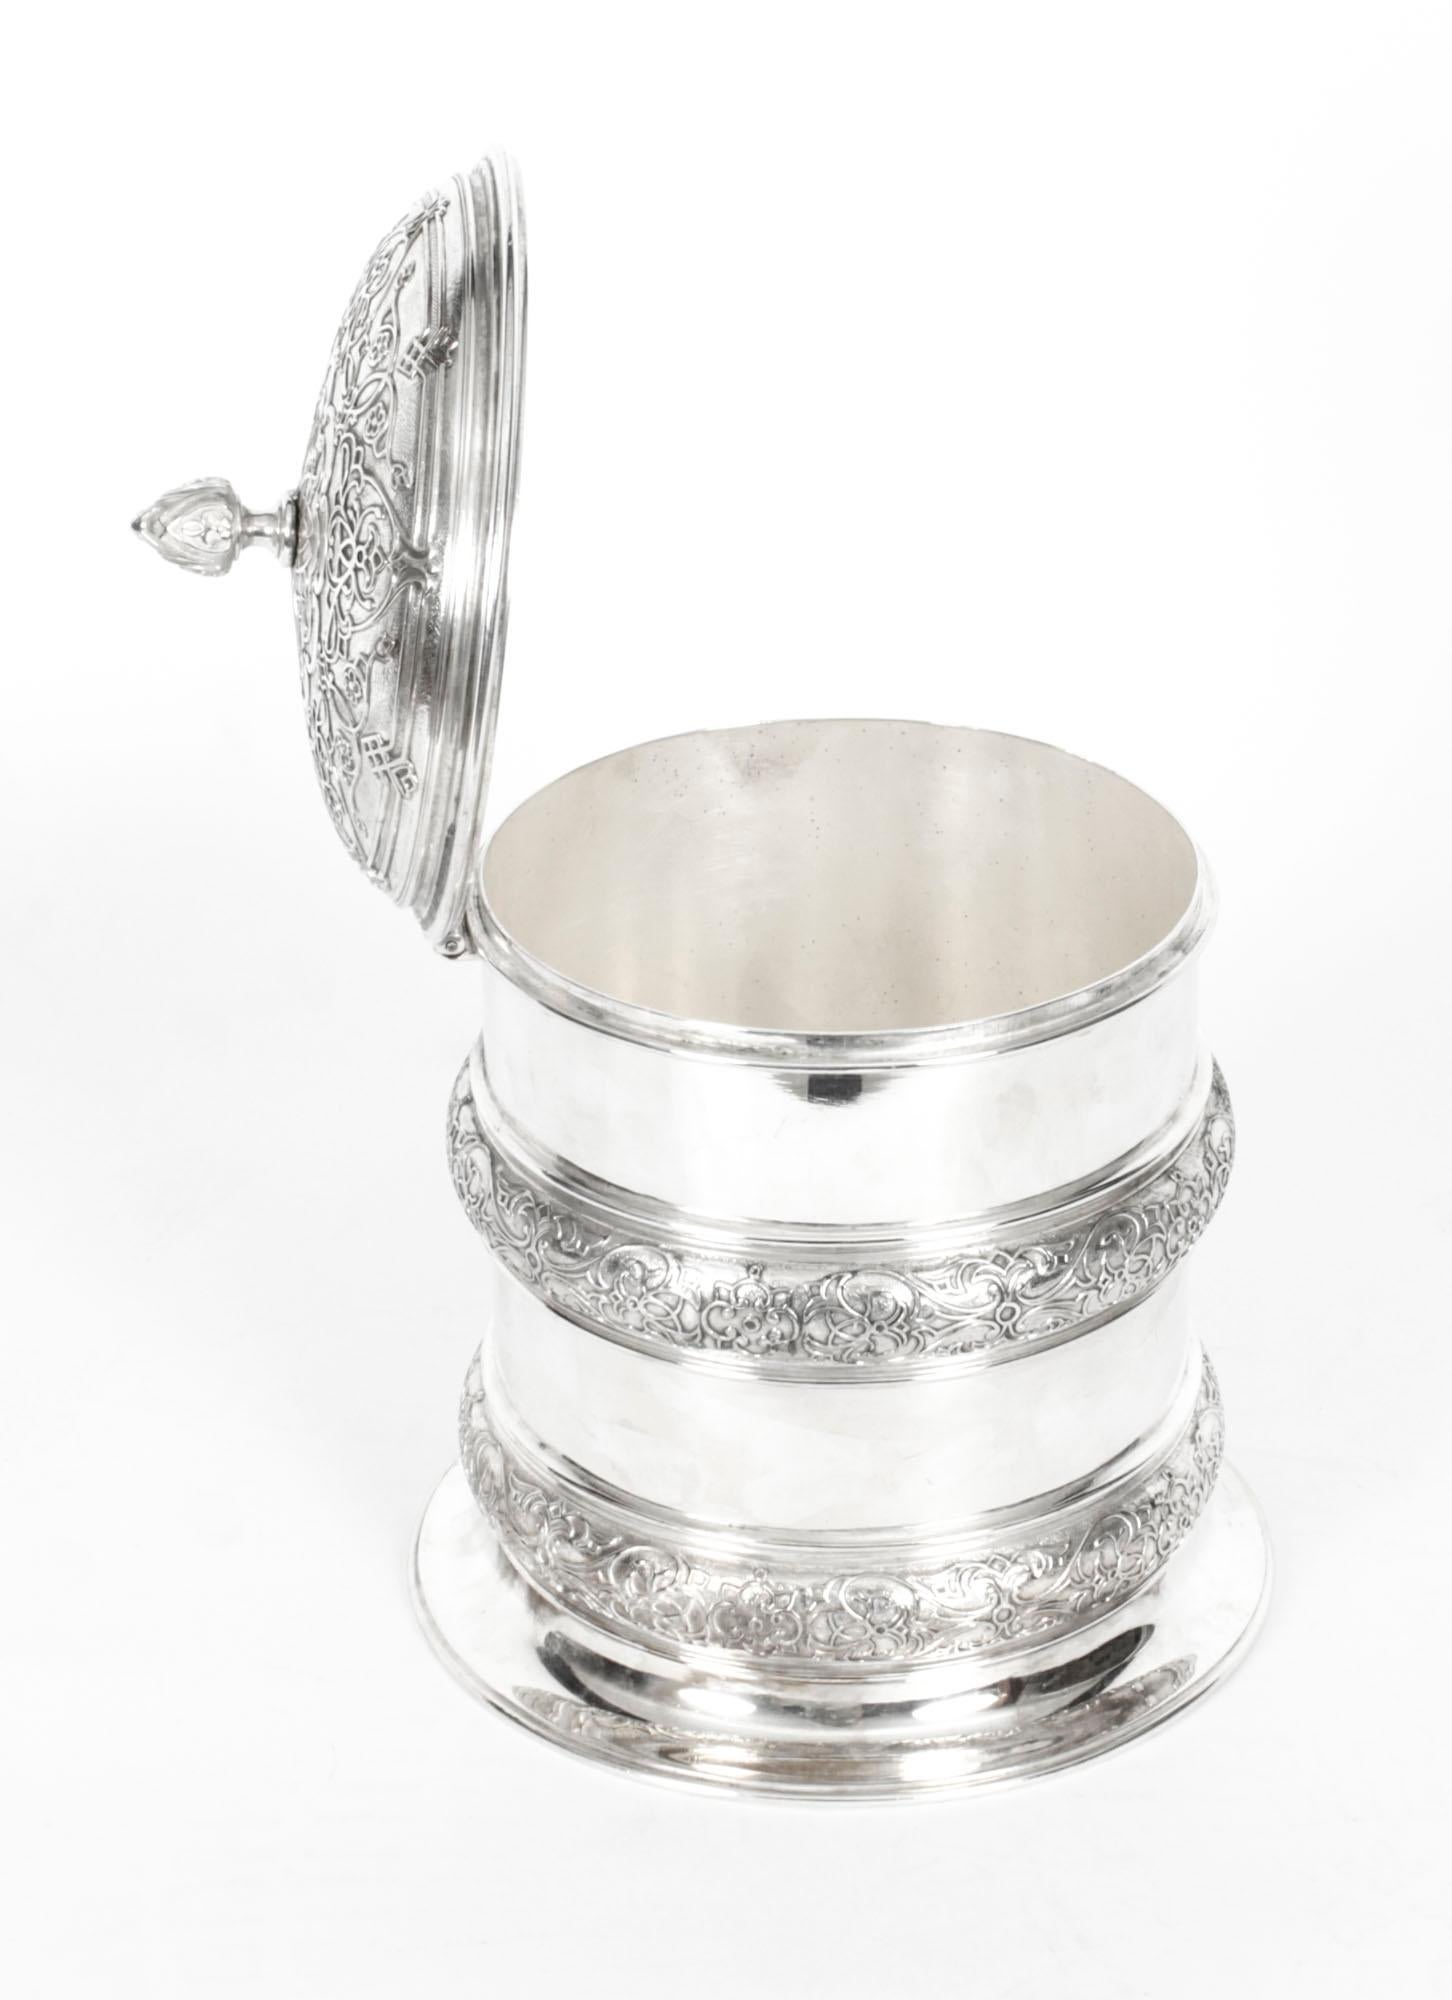 English Antique Silver Plate Drum Biscuit Box Elkington & Co, 19th Century For Sale